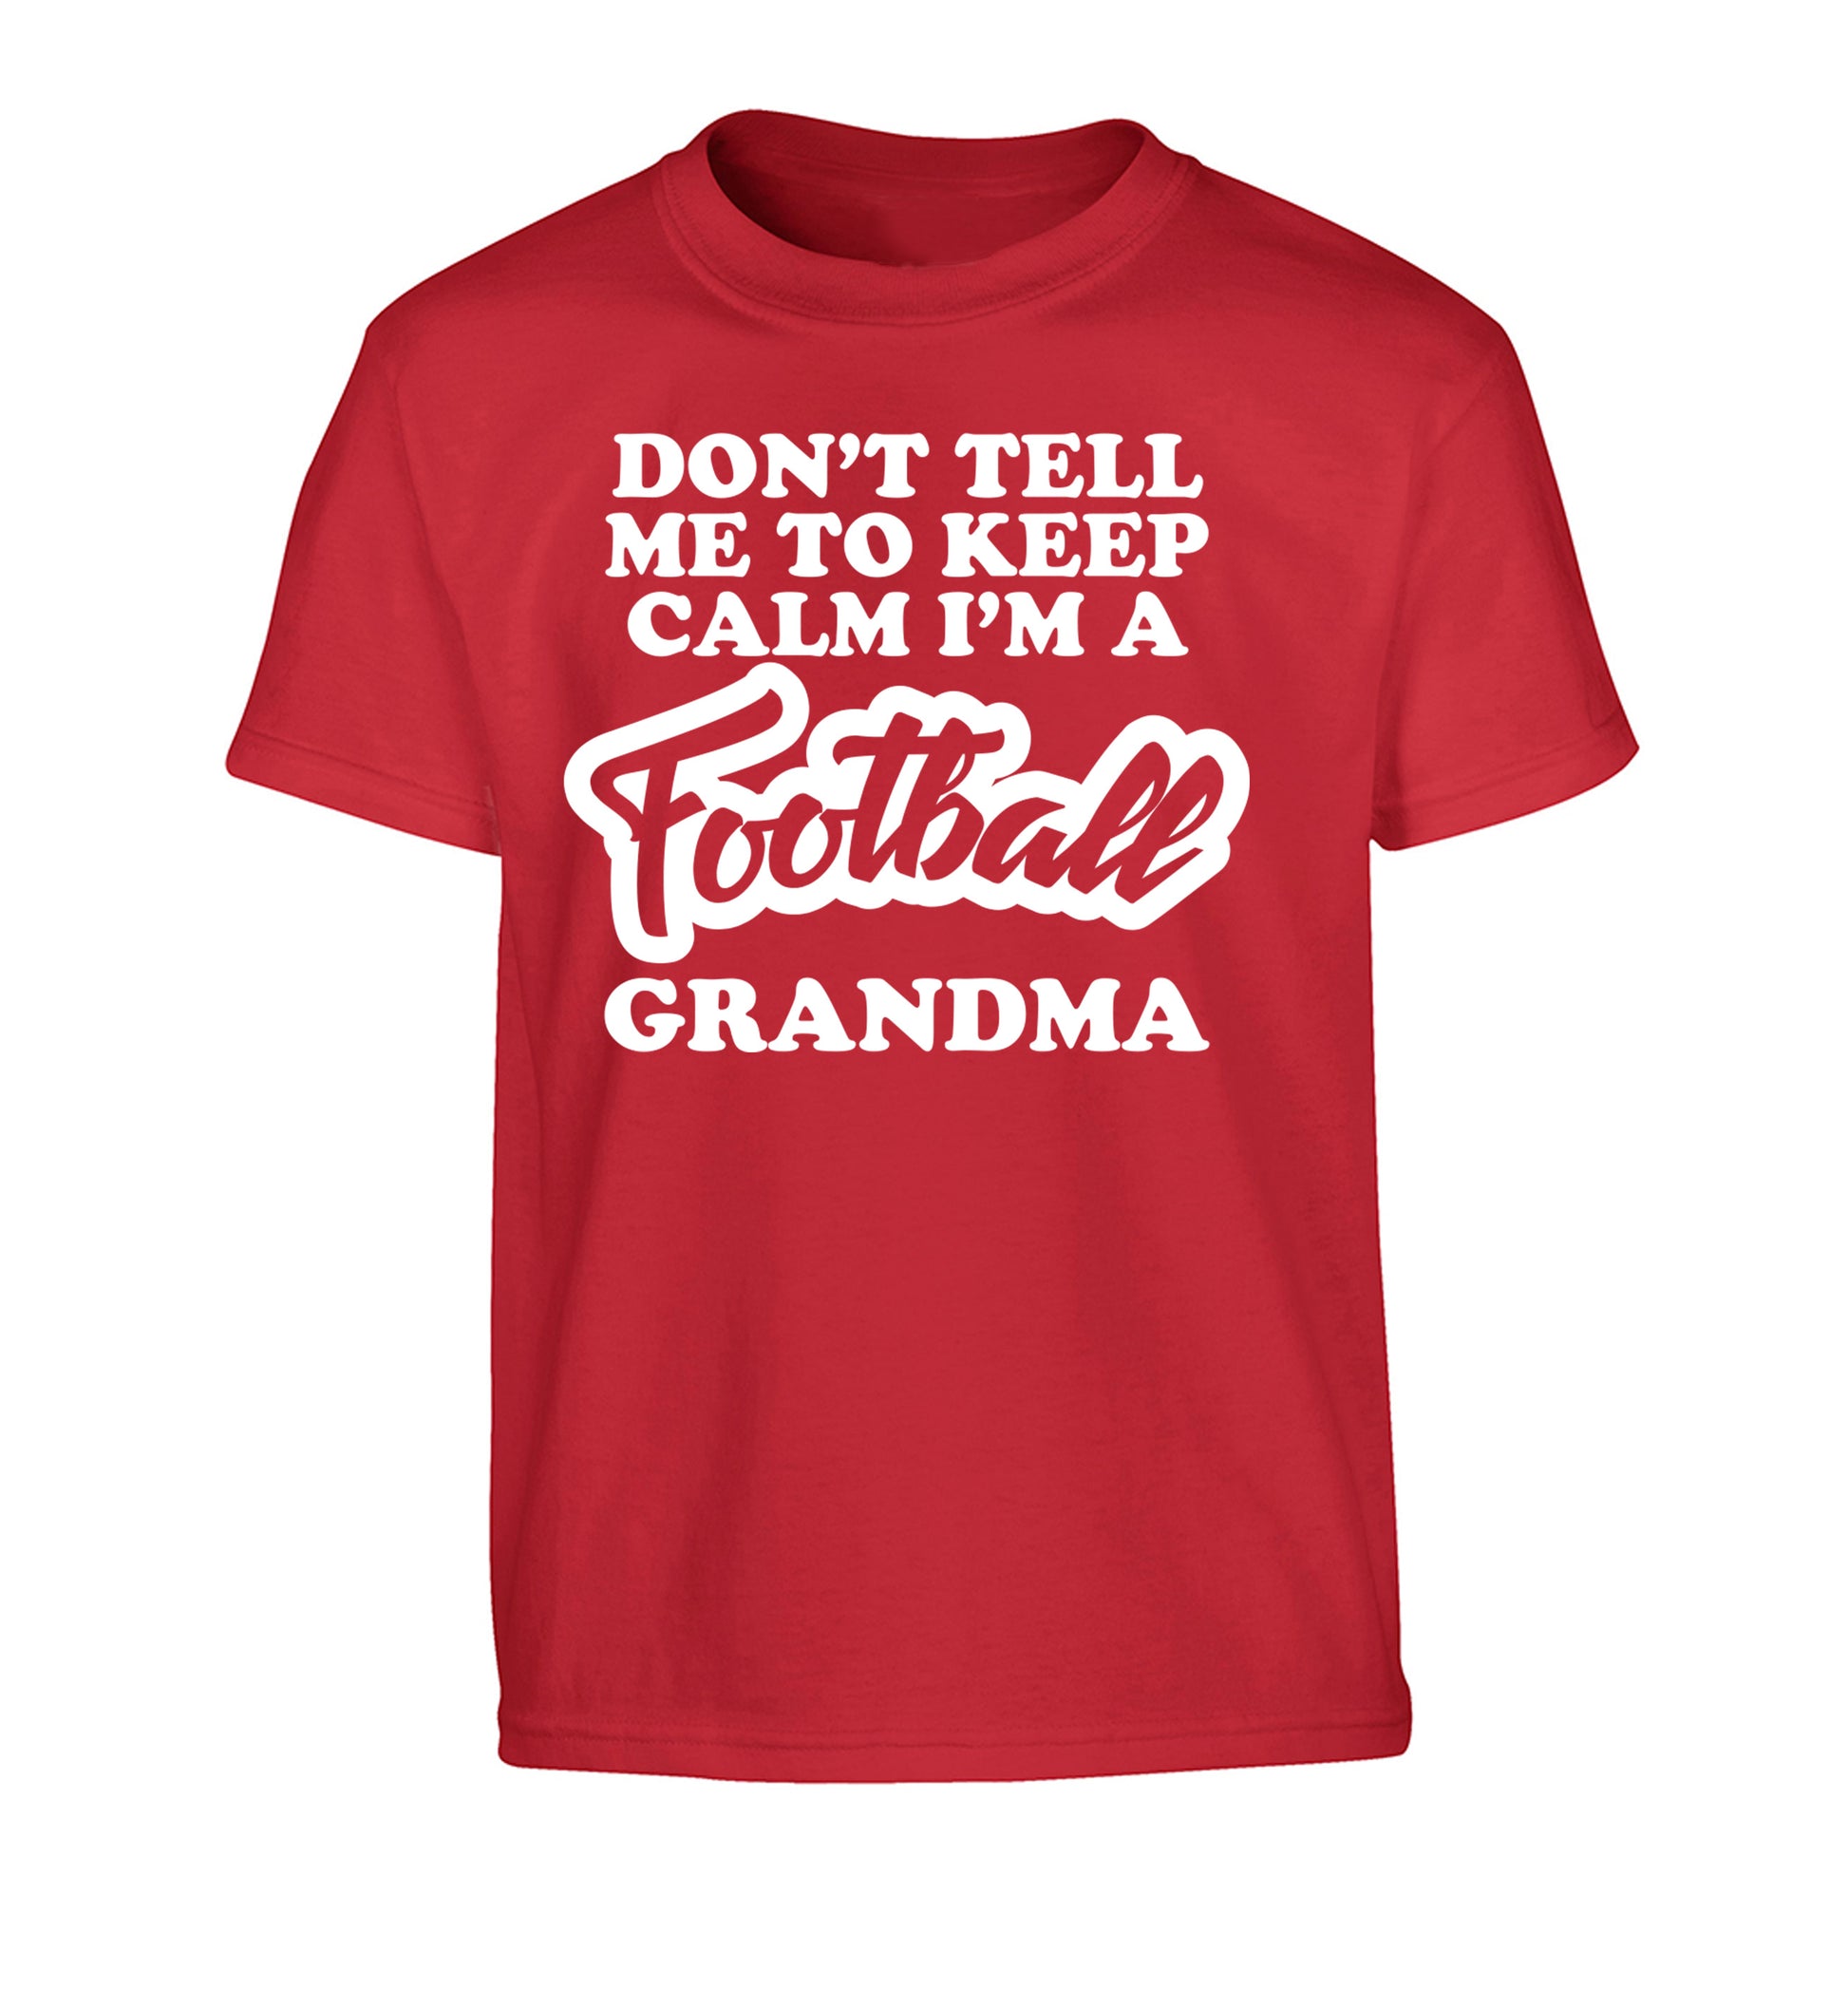 Don't tell me to keep calm I'm a football grandma Children's red Tshirt 12-14 Years